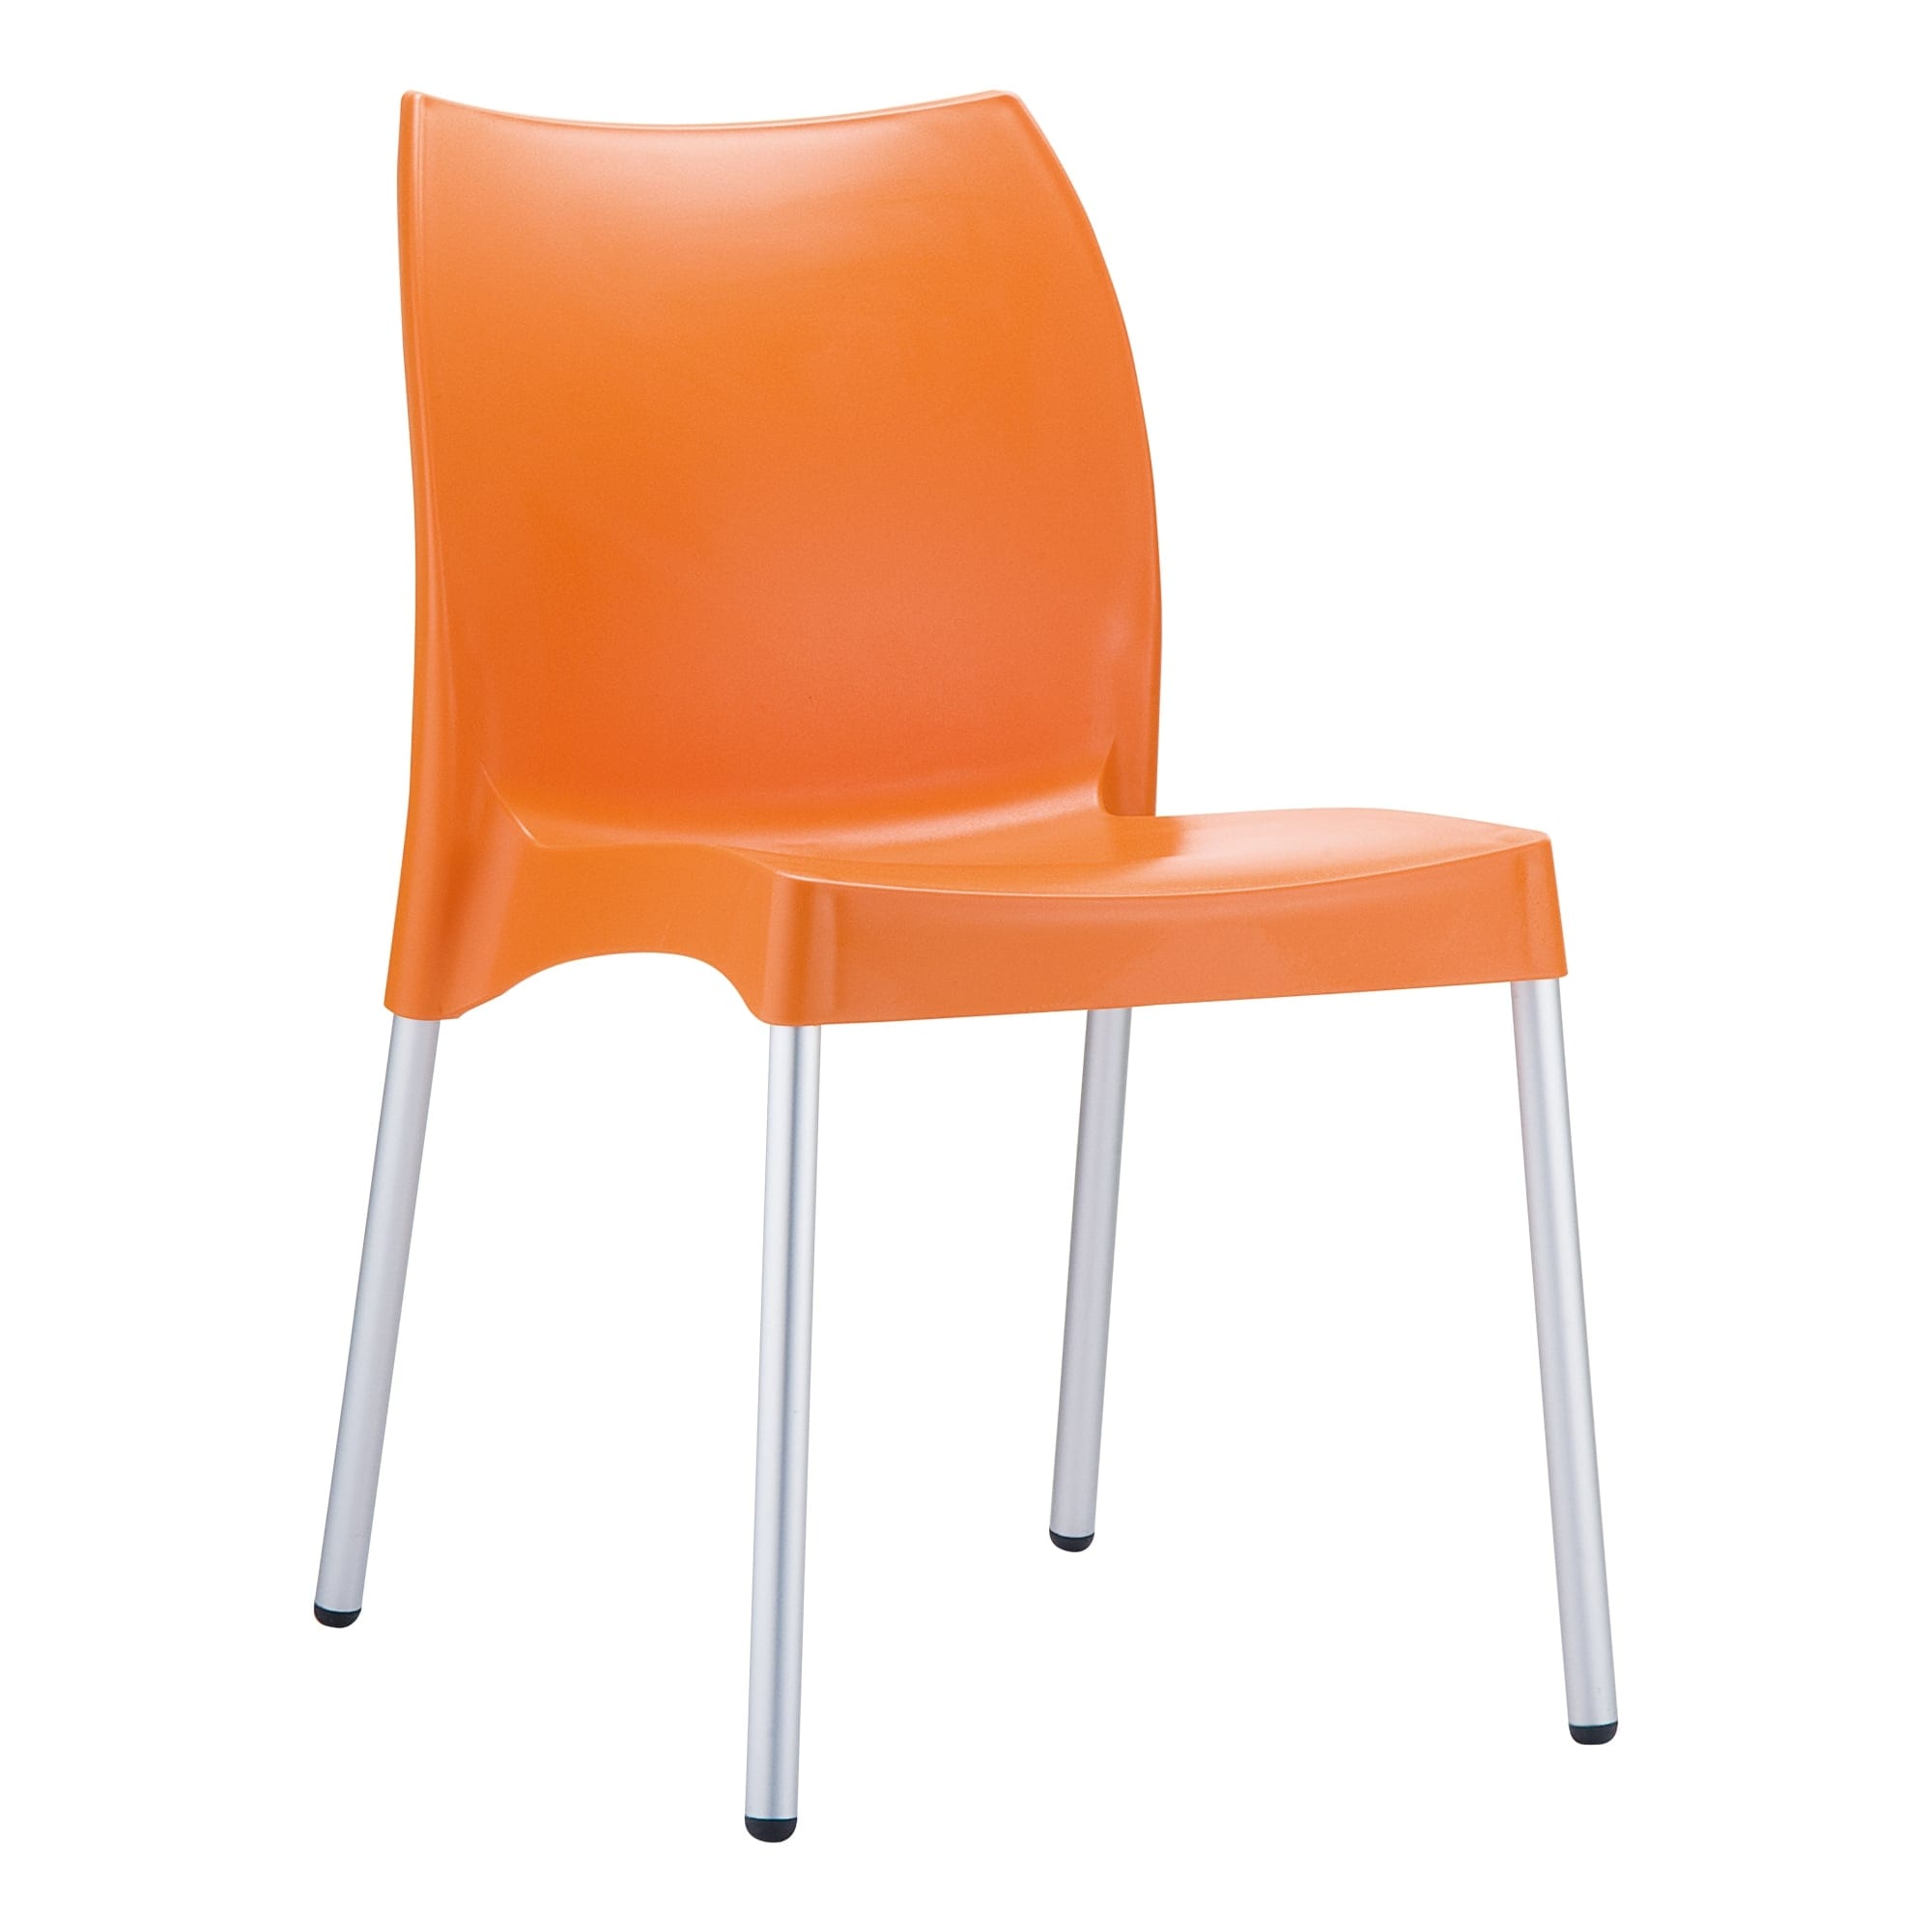 Iconic Side Chair - Orange